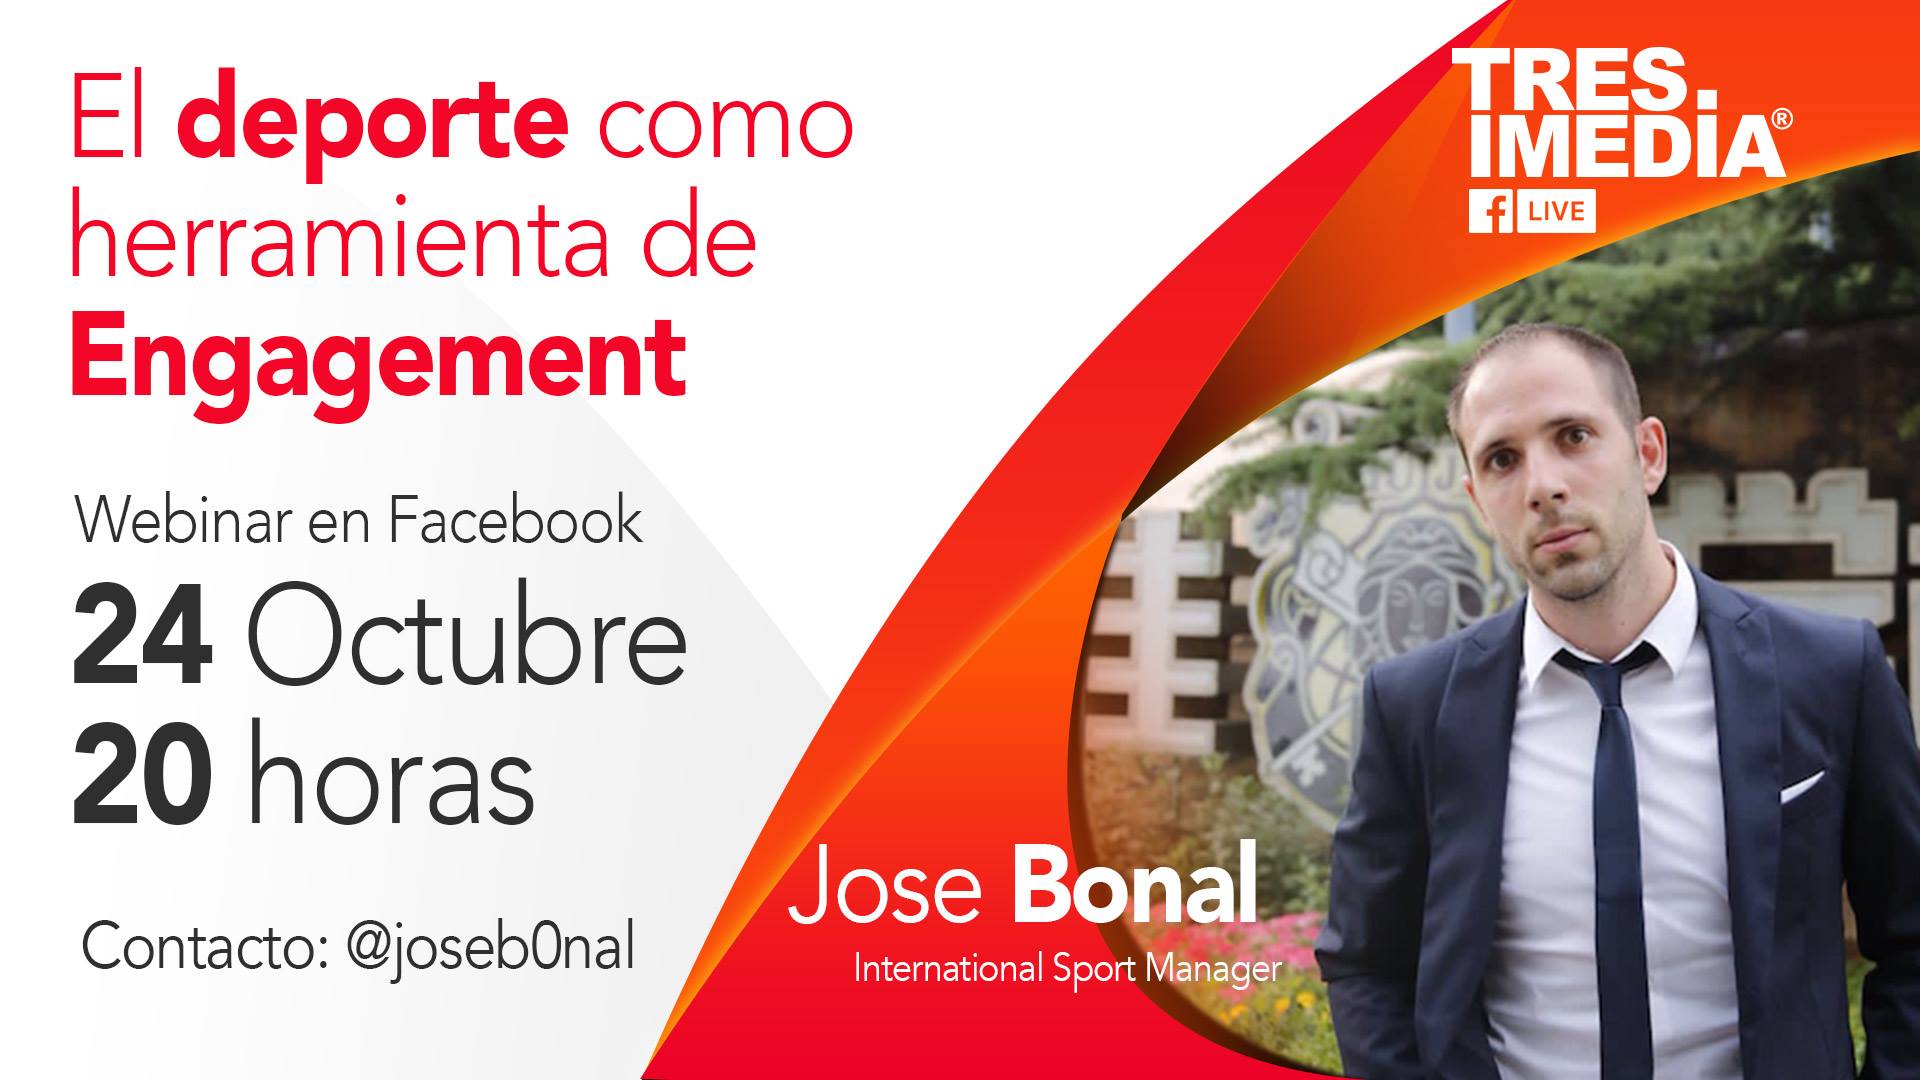 José Bonal